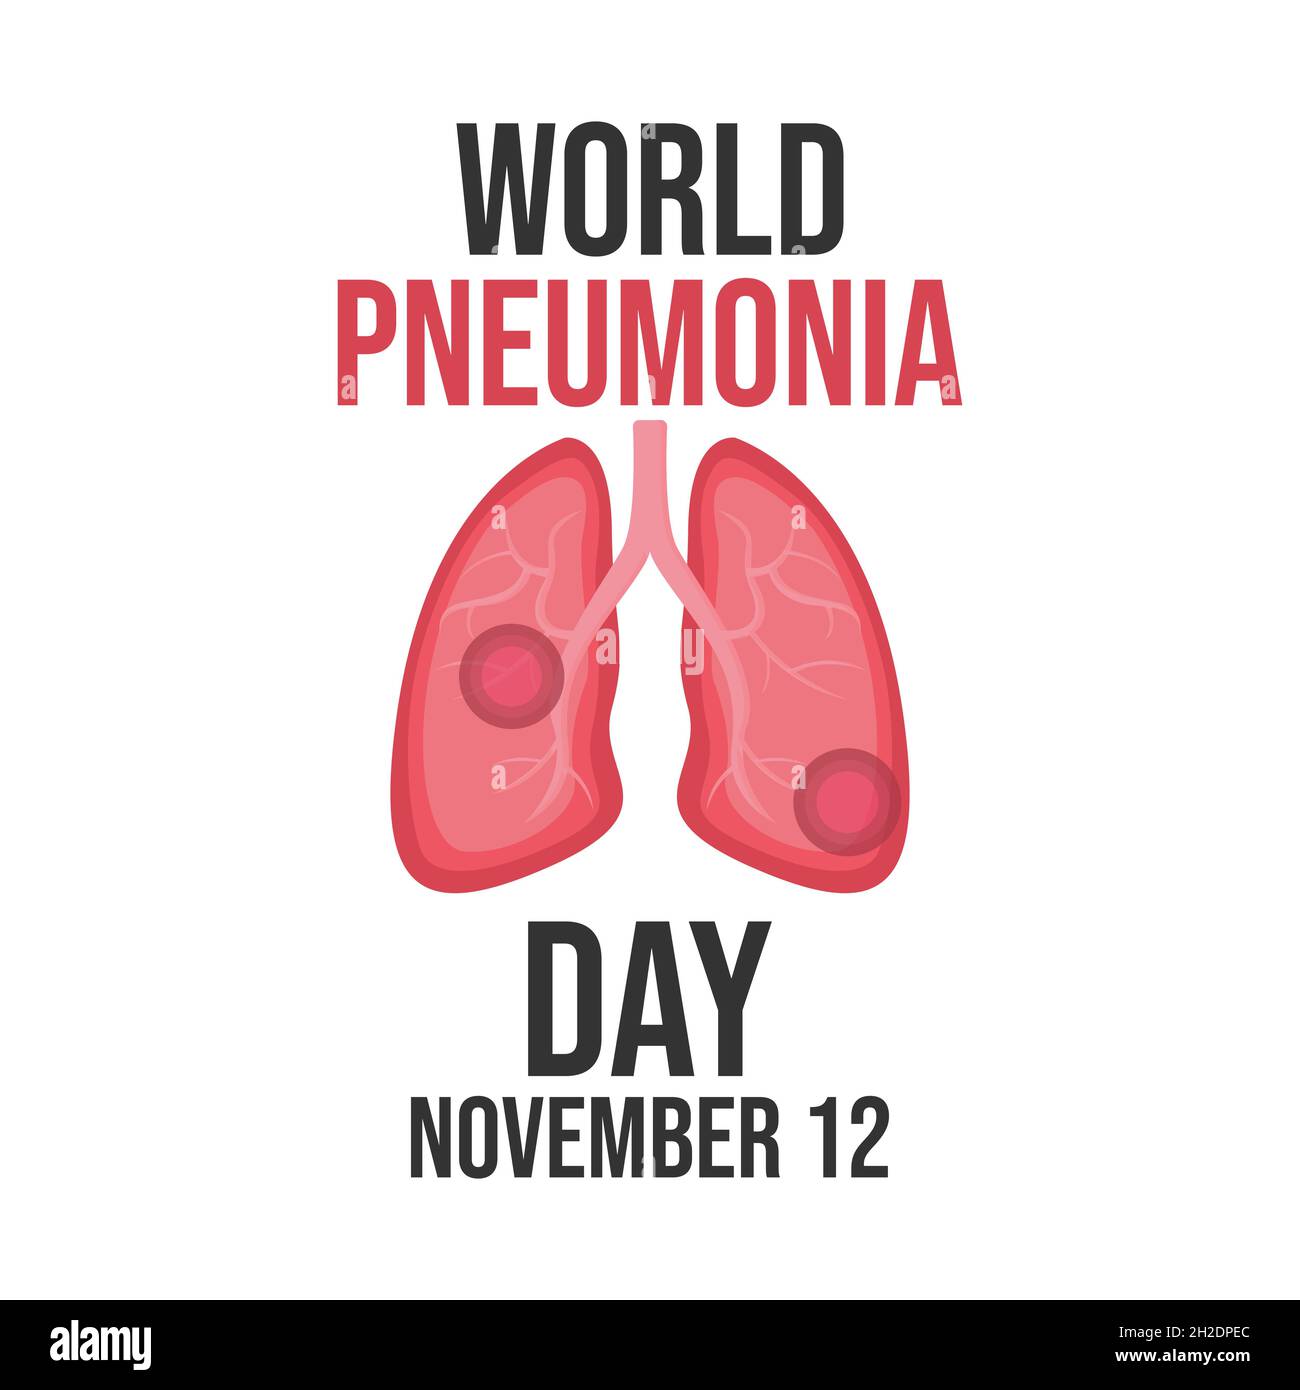 World pneumonia day concept background design vector image. Vector graphic of world pneumonia day good for world pneumonia day celebration Stock Vector